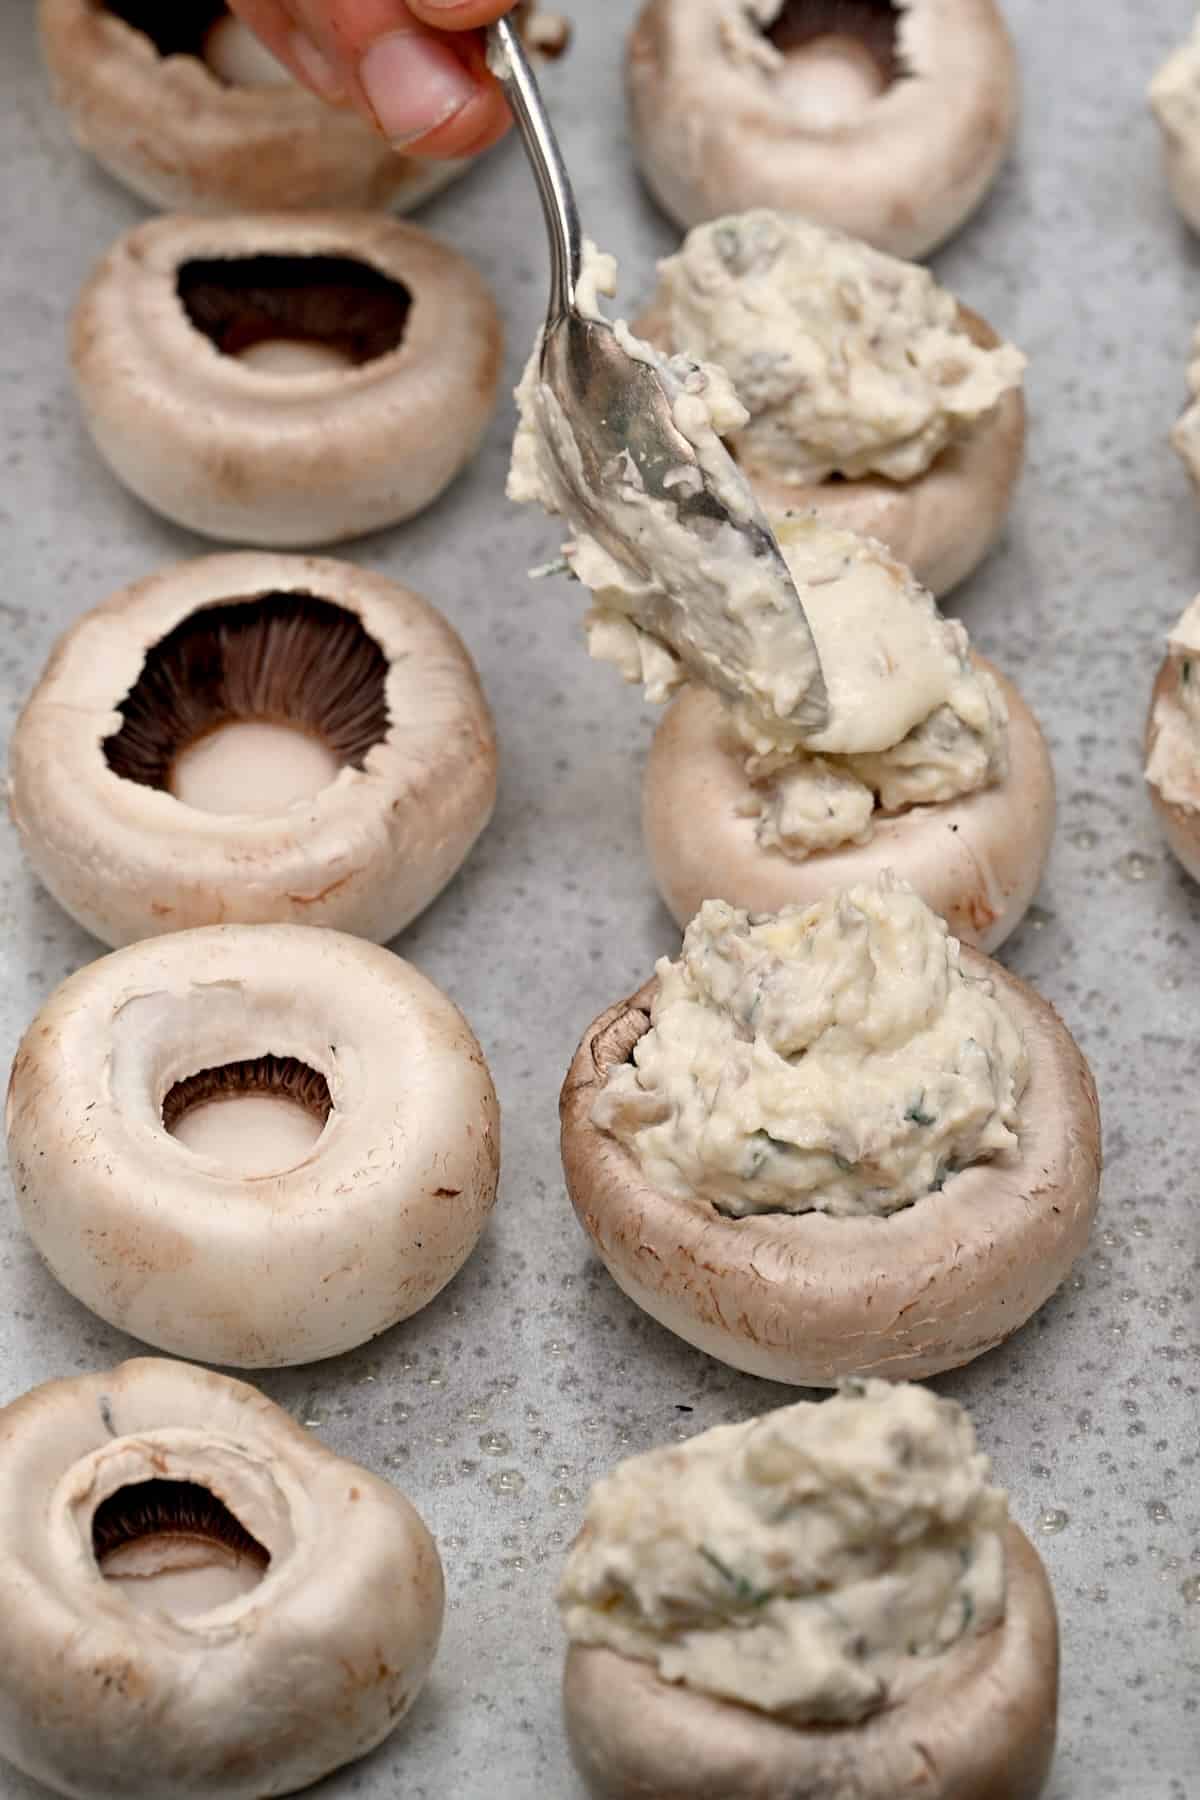 Adding stuffing to mushroom caps